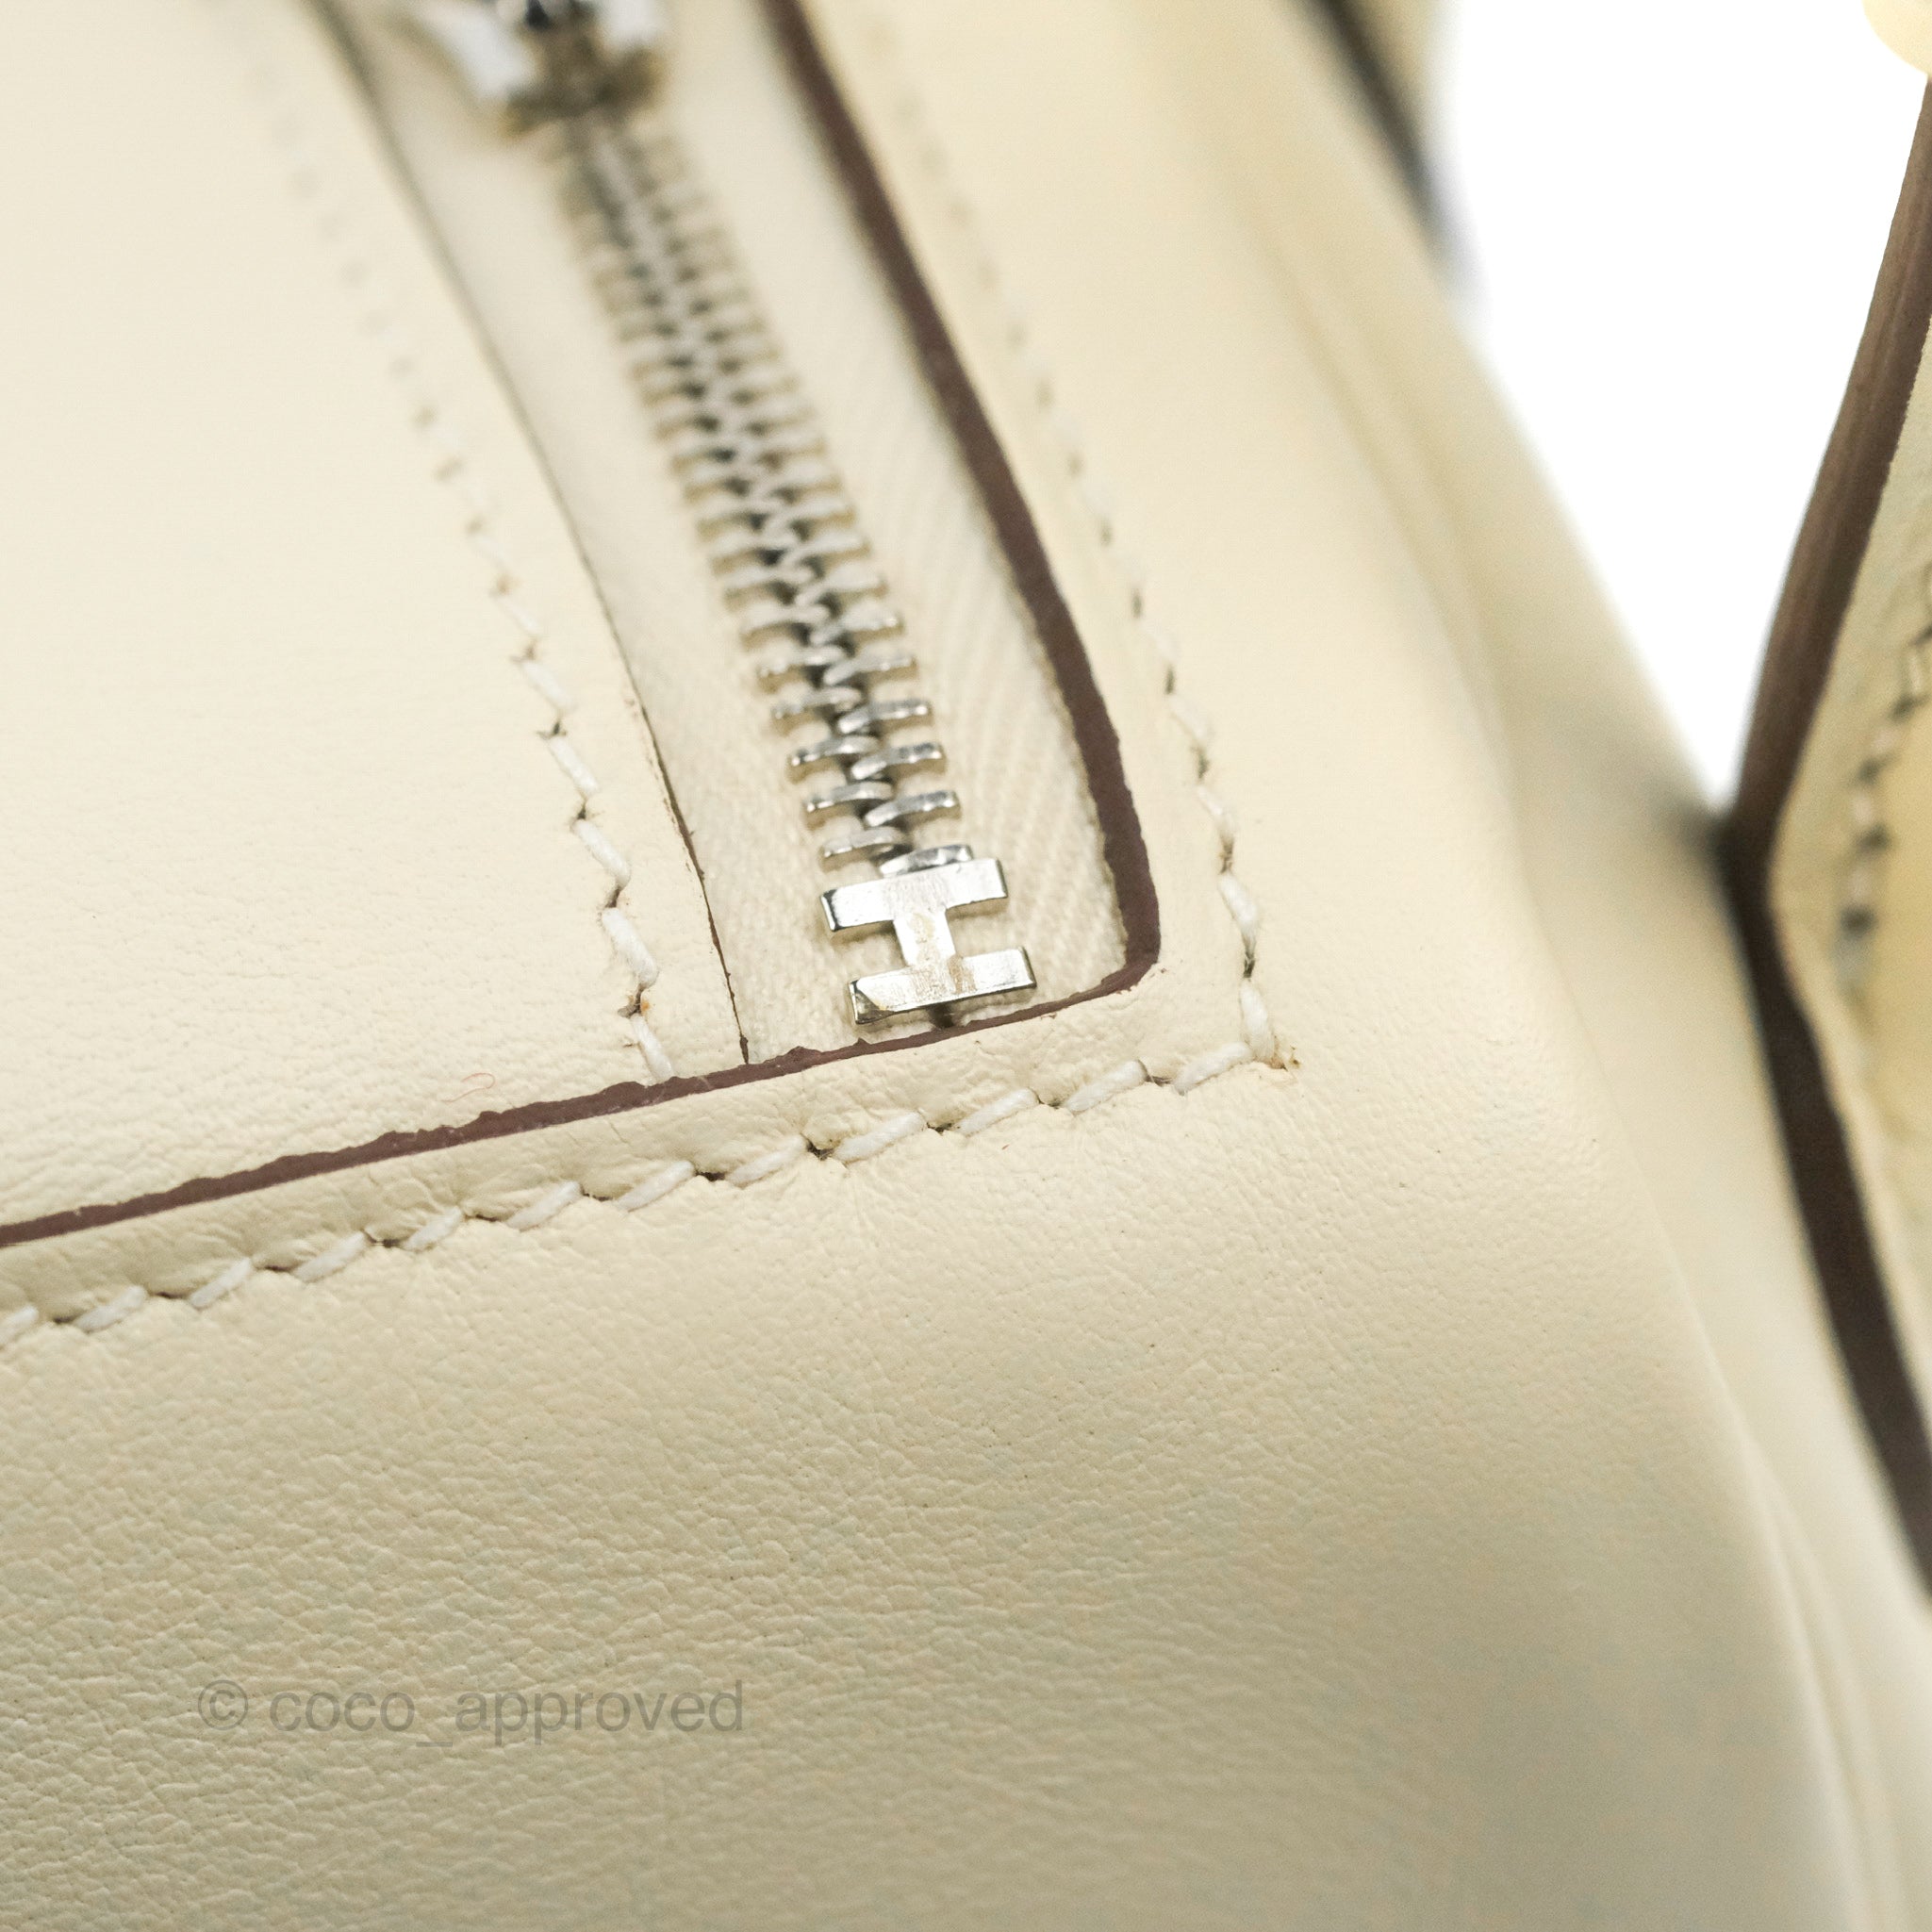 Hermès Nata/Lime Swift Leather Palladium Finish Mini Lindy Bag Hermes